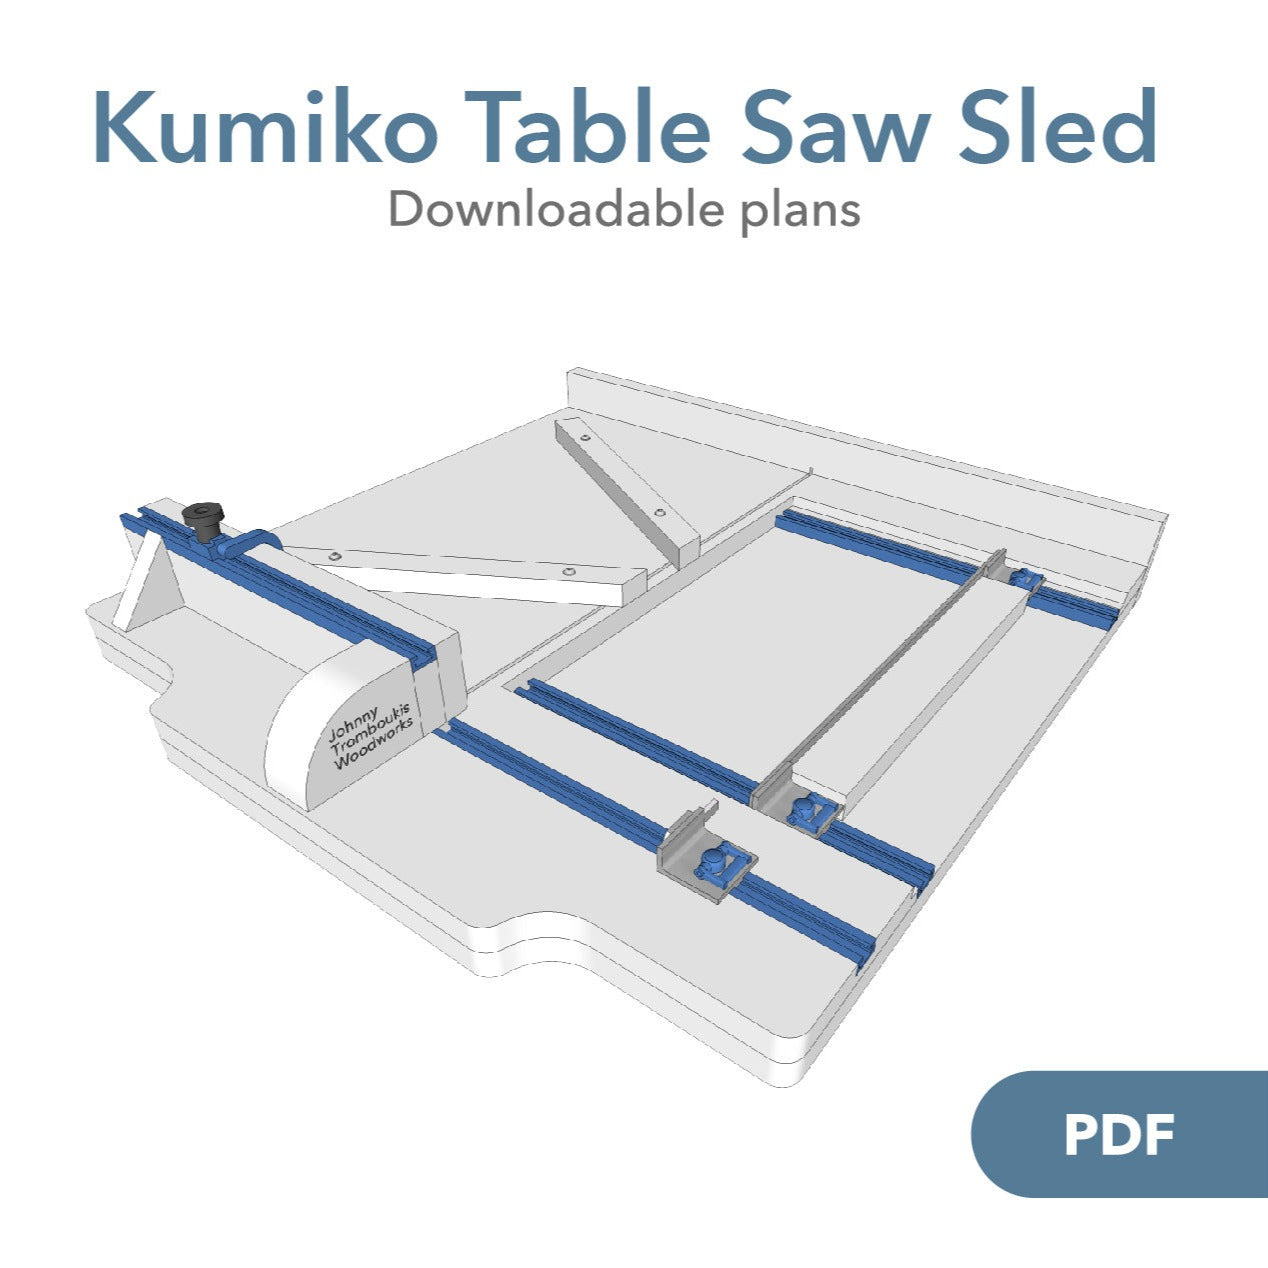 Plans - Kumiko Table Saw Sled